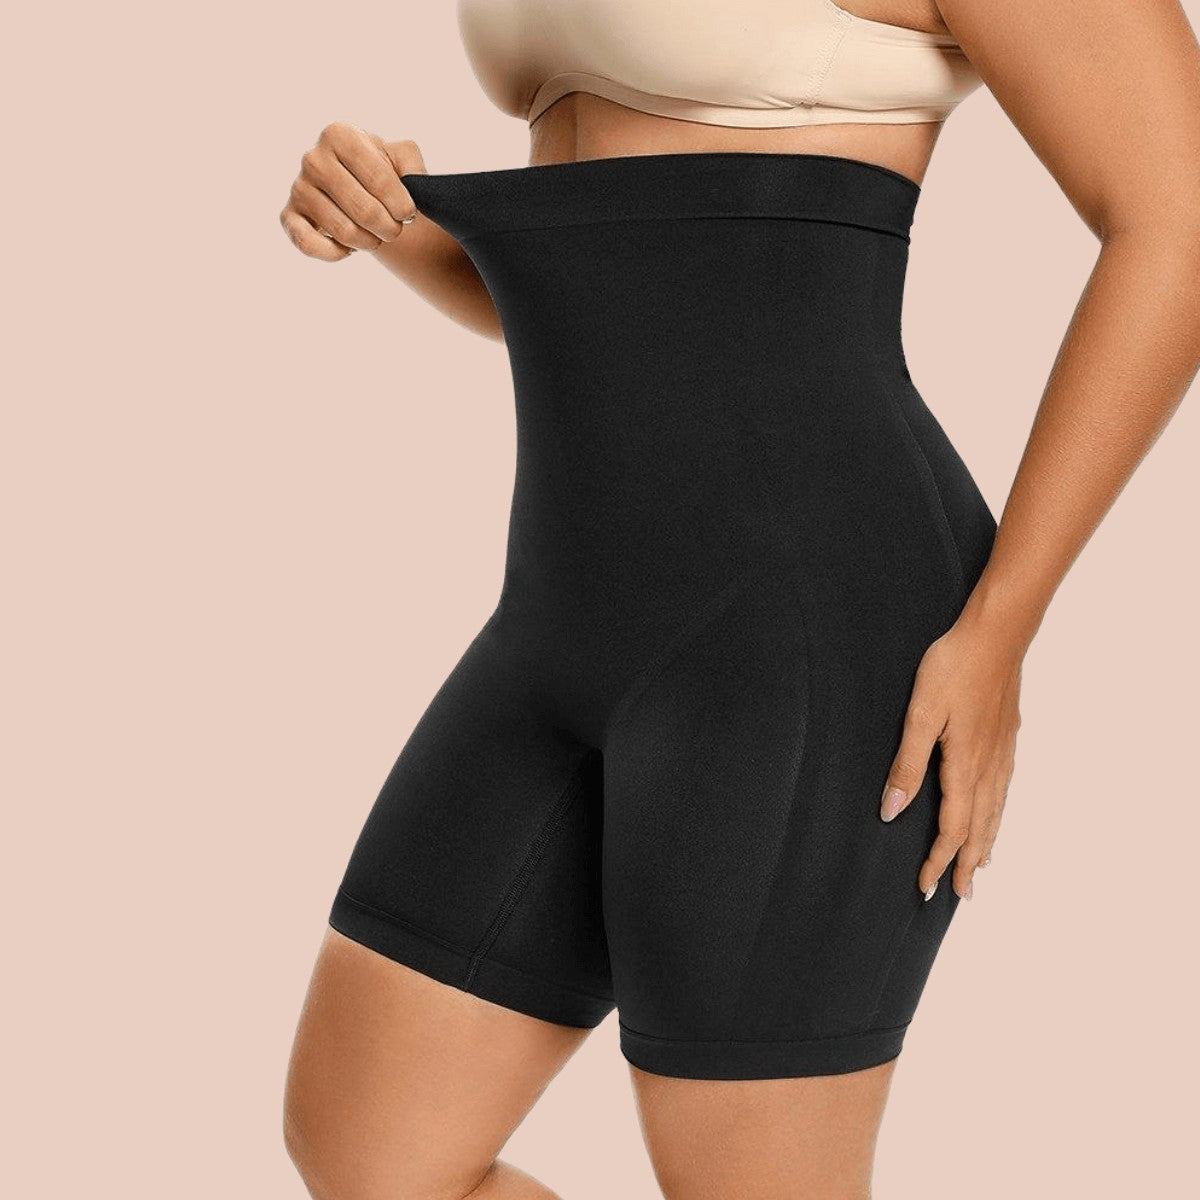 Women's High Waist Tummy Control Body Shaper Shorts